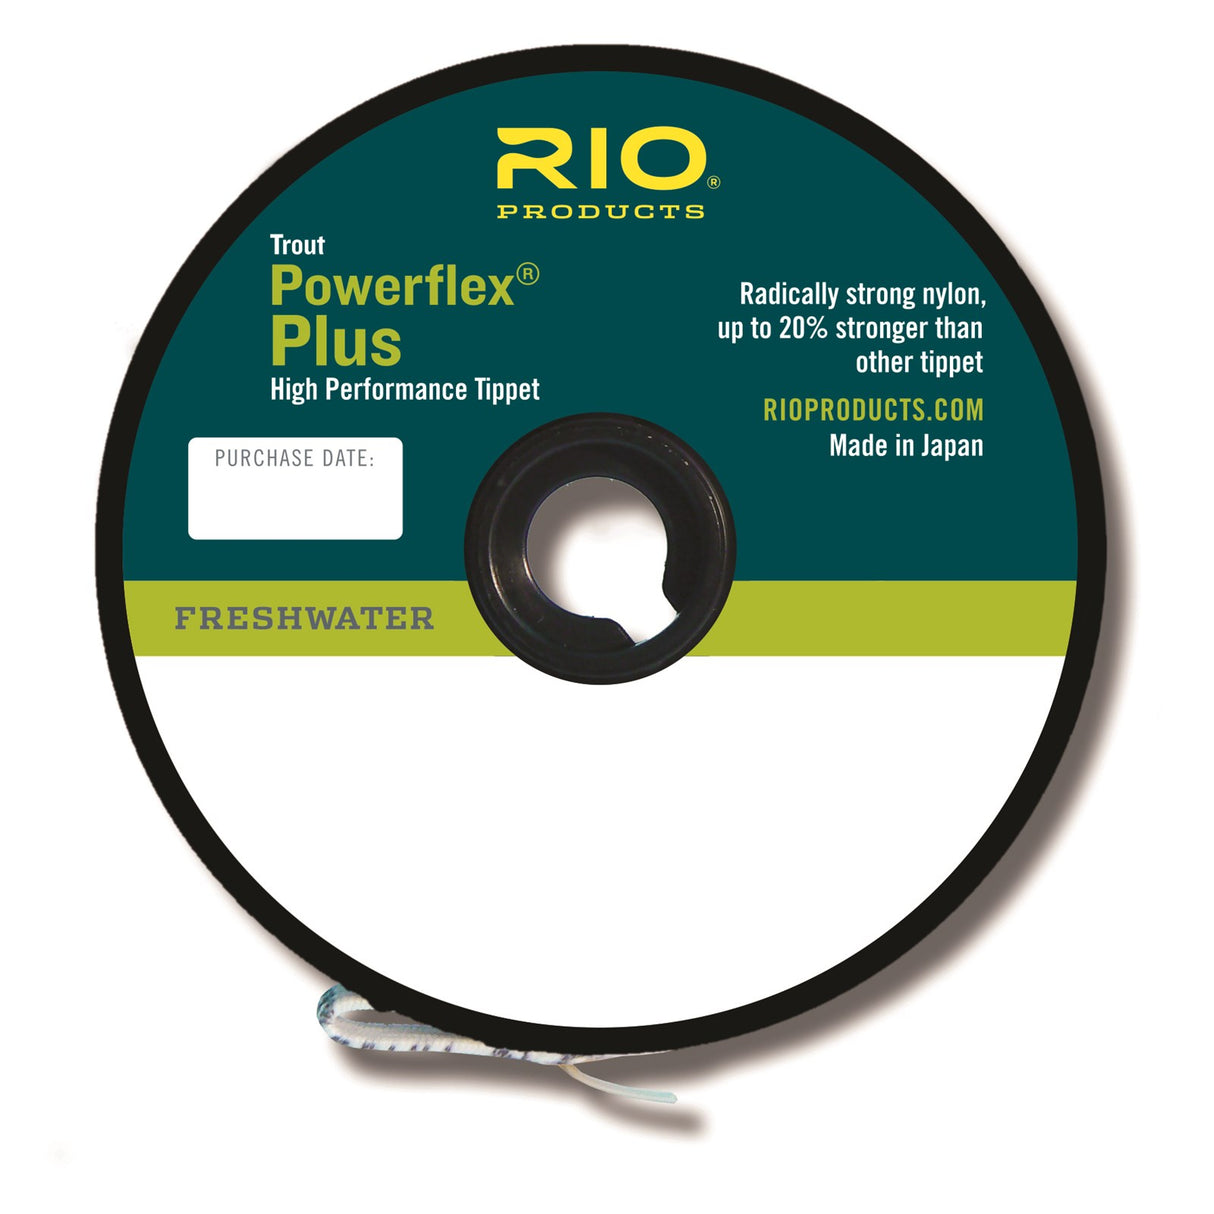 RIO Powerflex Plus 7X Tippet 50Yd
Size: 7X
Length: 50Yds/46M
Test: 2.75Lb/1.3Kg
Diameter: 0.004In/0.102Mm